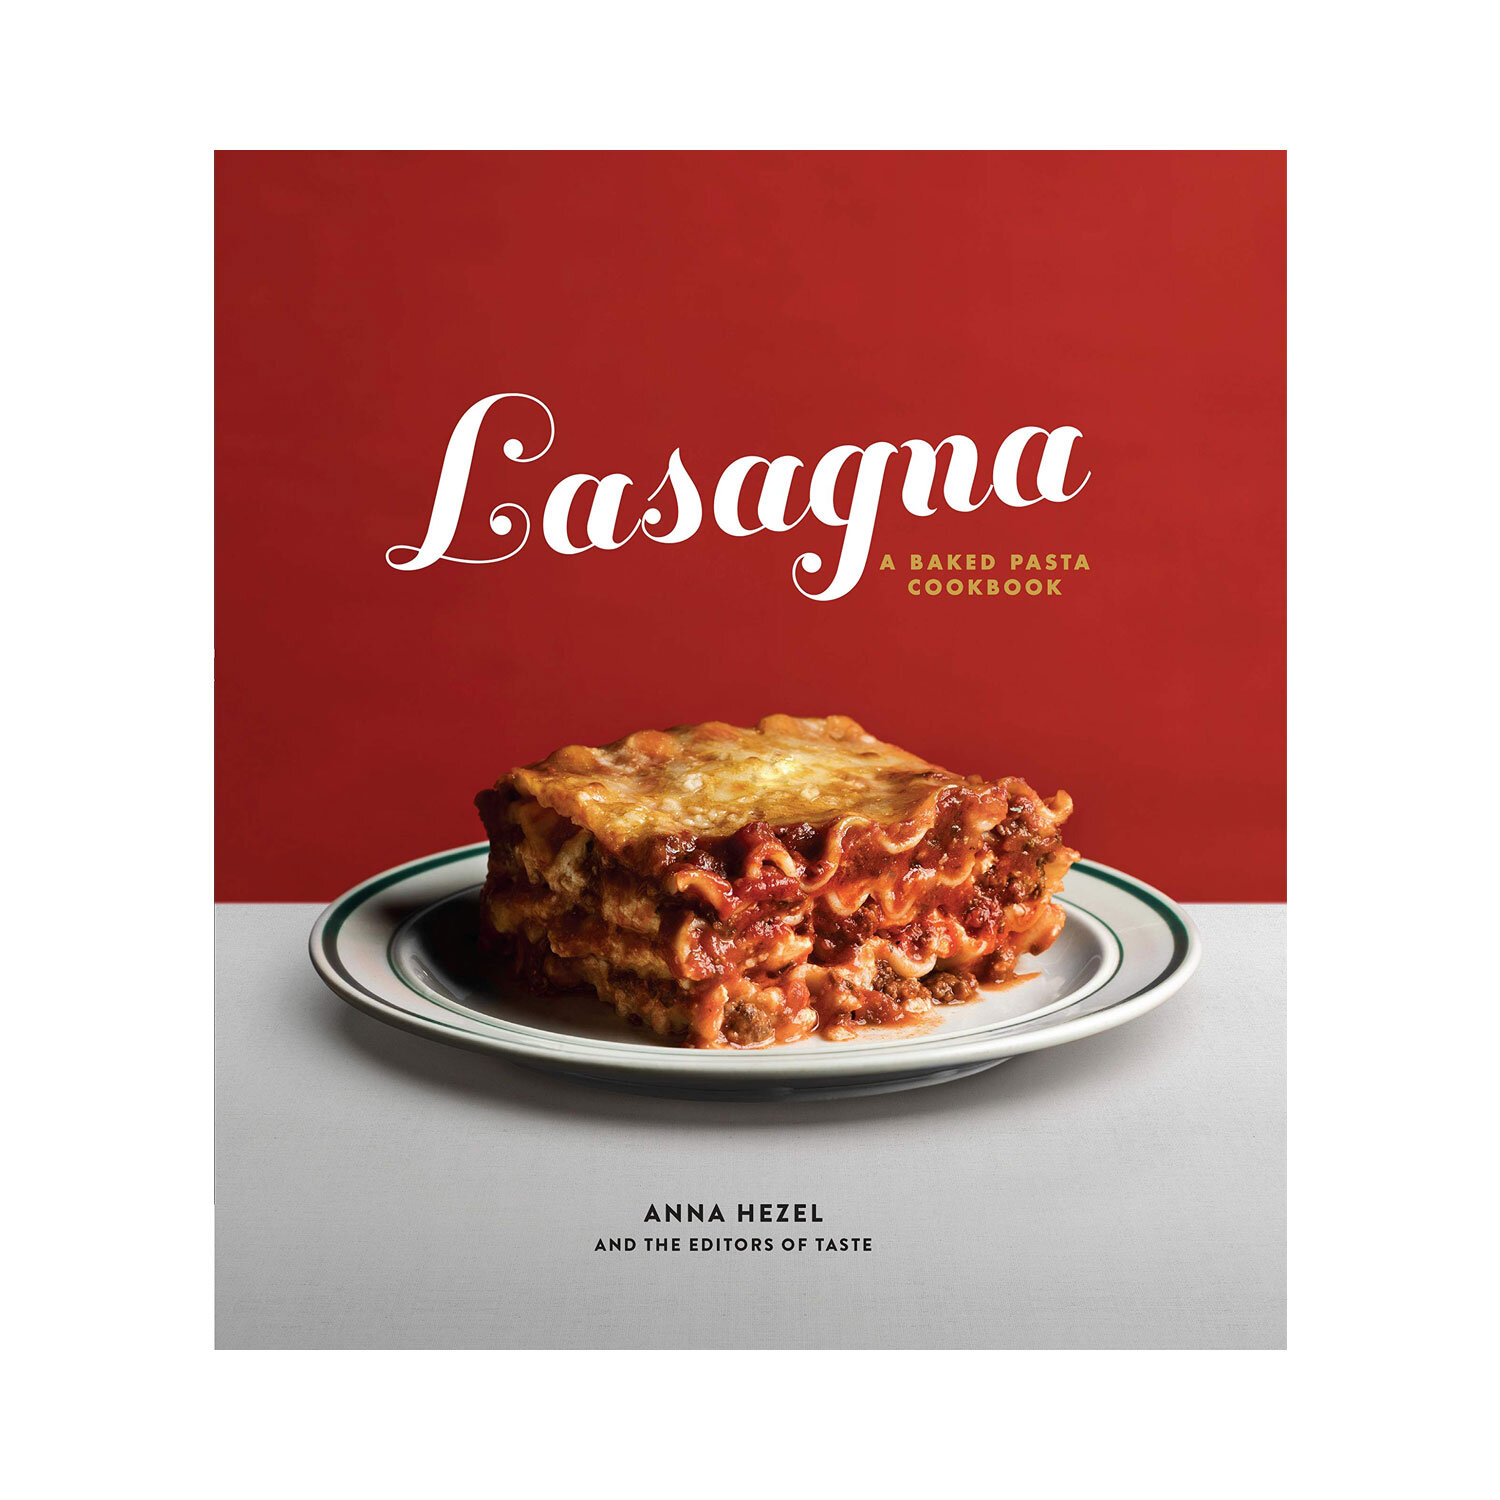 Lasagna: A Baked Pasta Cookbook by Anna Hezel